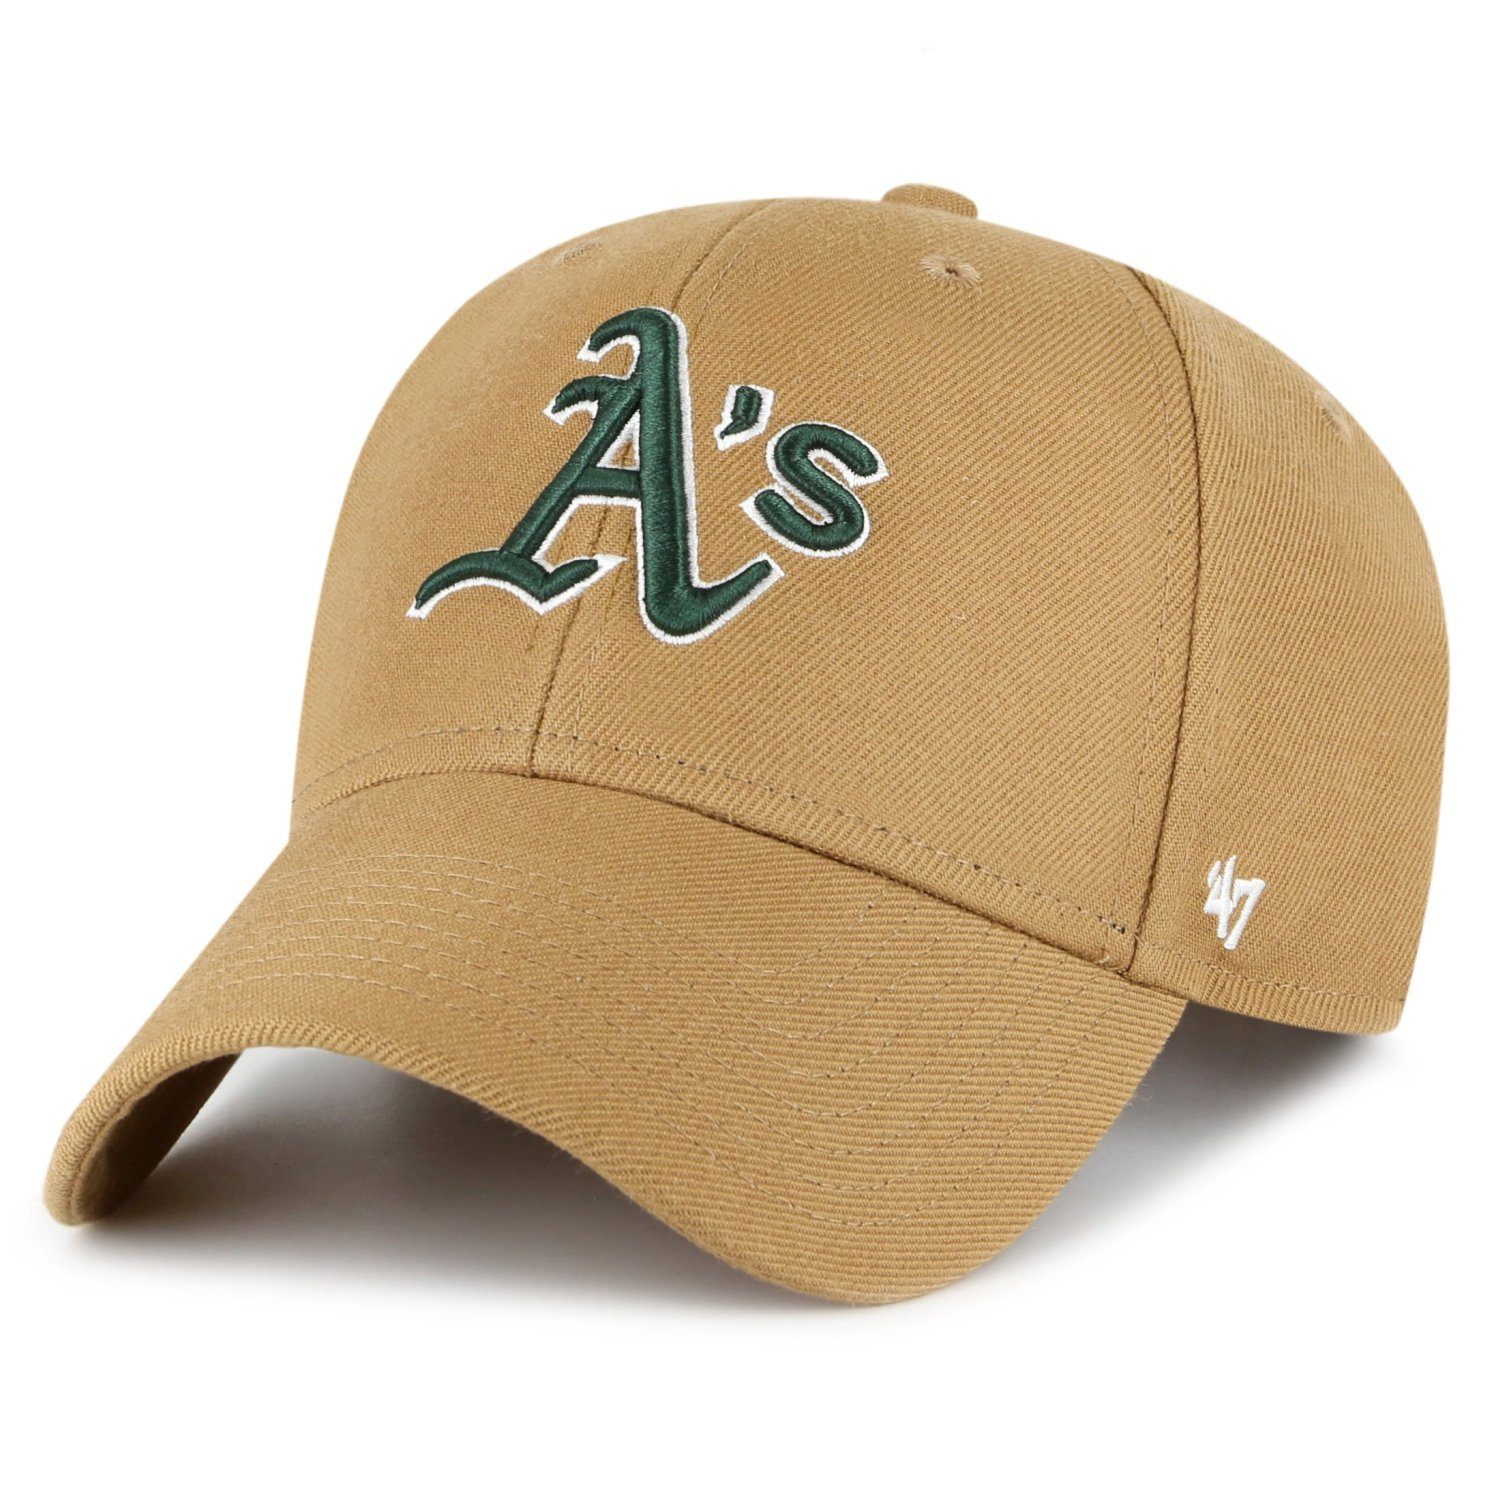 '47 Brand Snapback Cap MLB Oakland Athletics